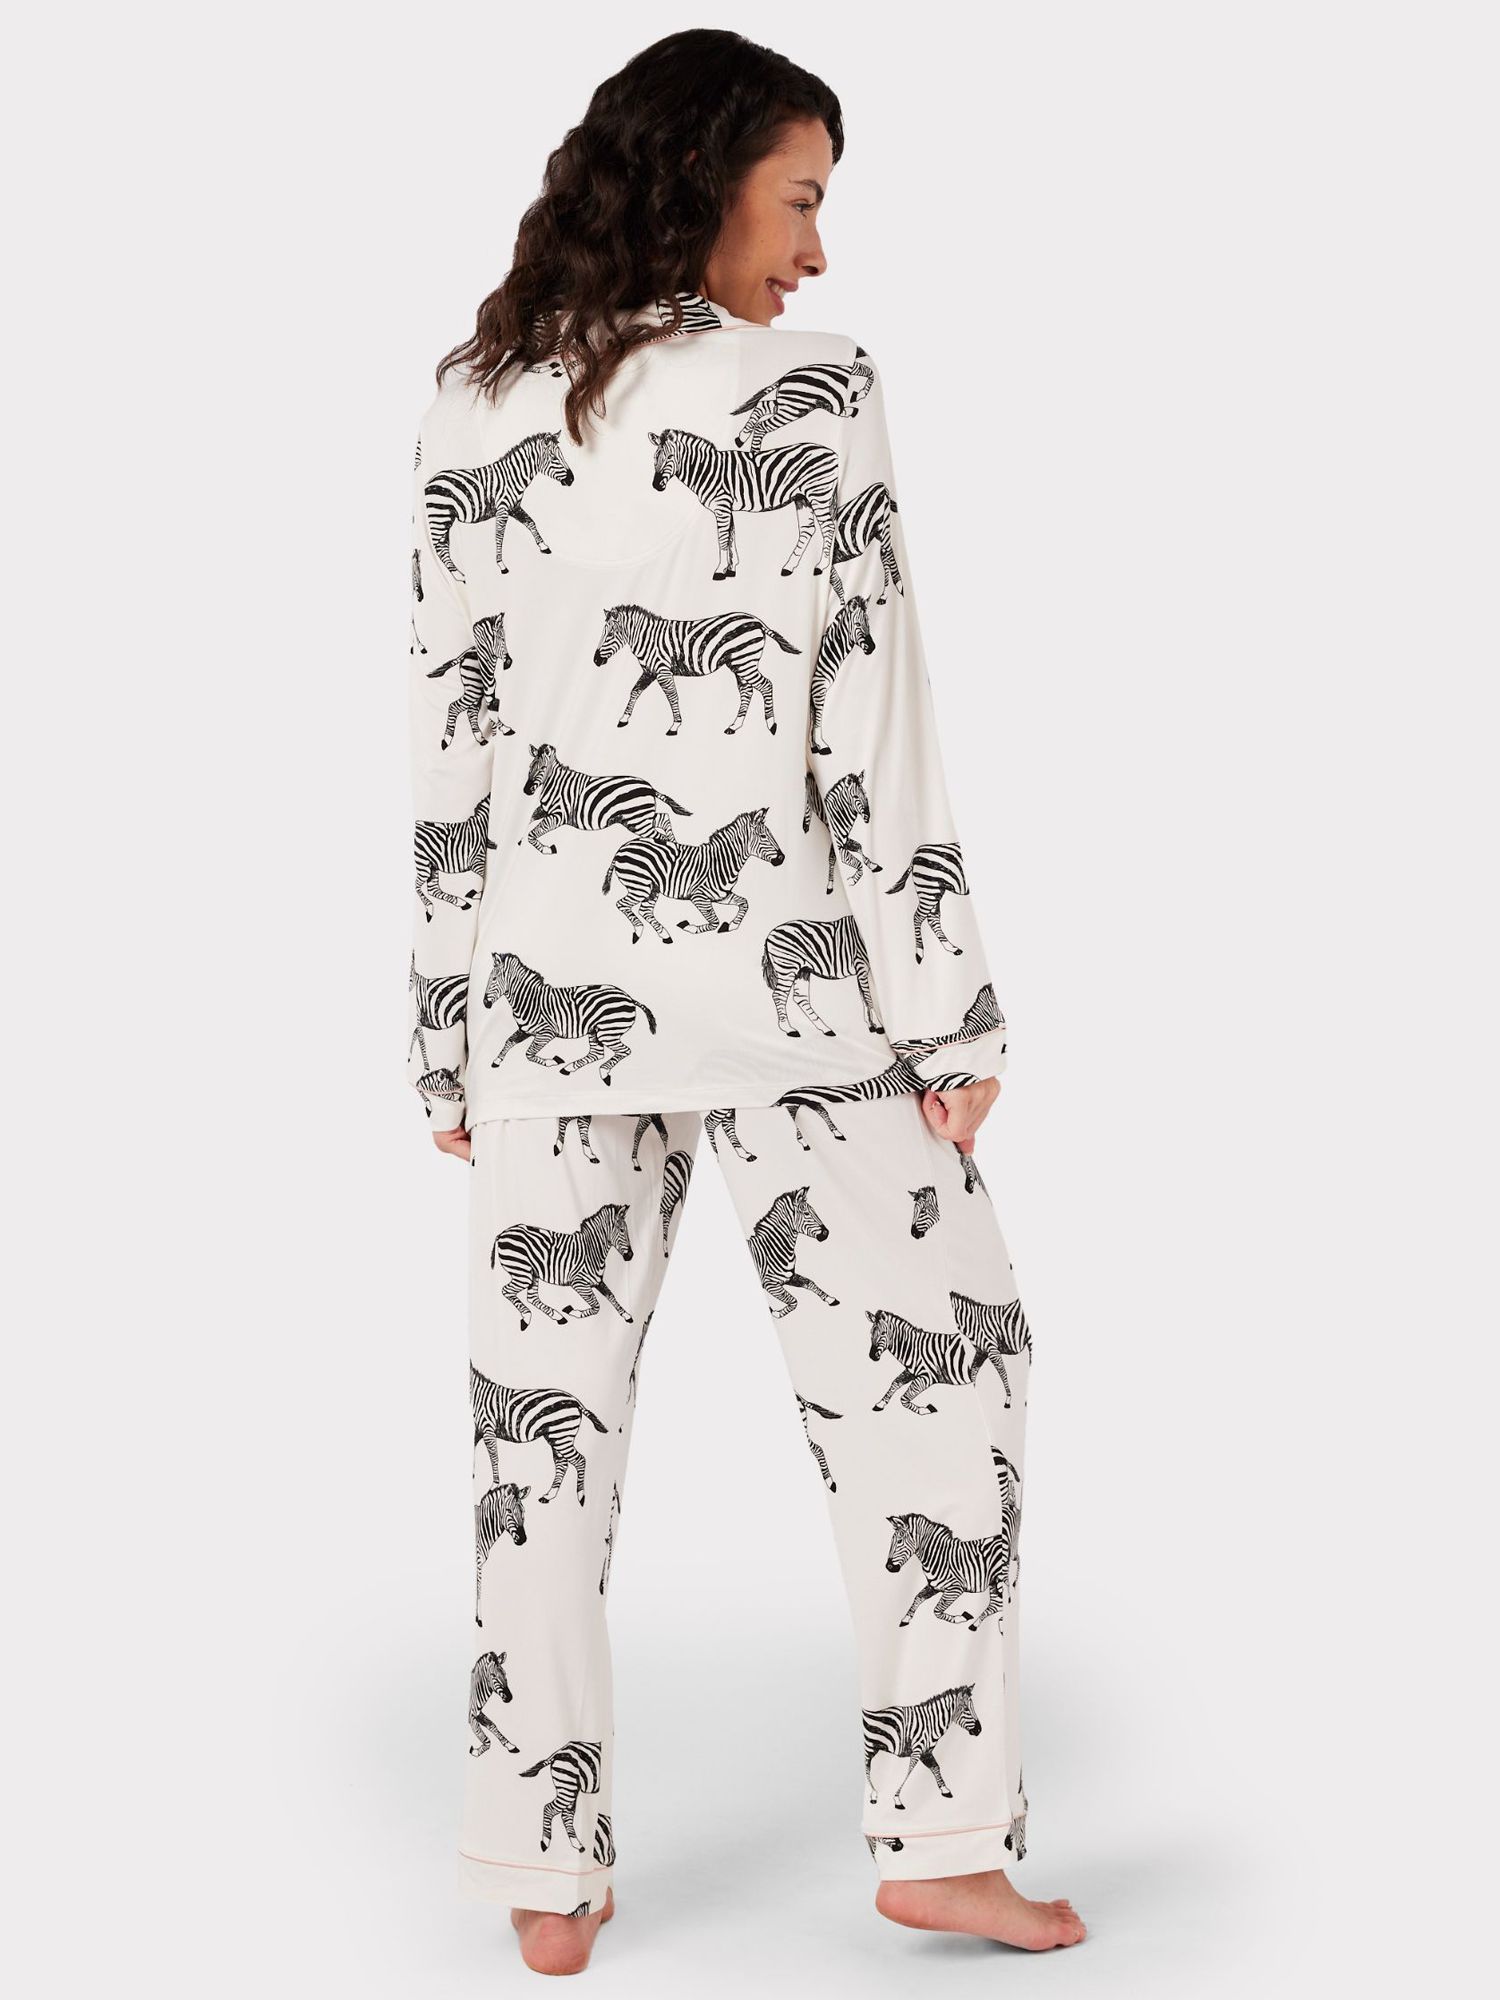 Chelsea Peers Zebra Long Shirt Maternity Pyjama Set, White, 10